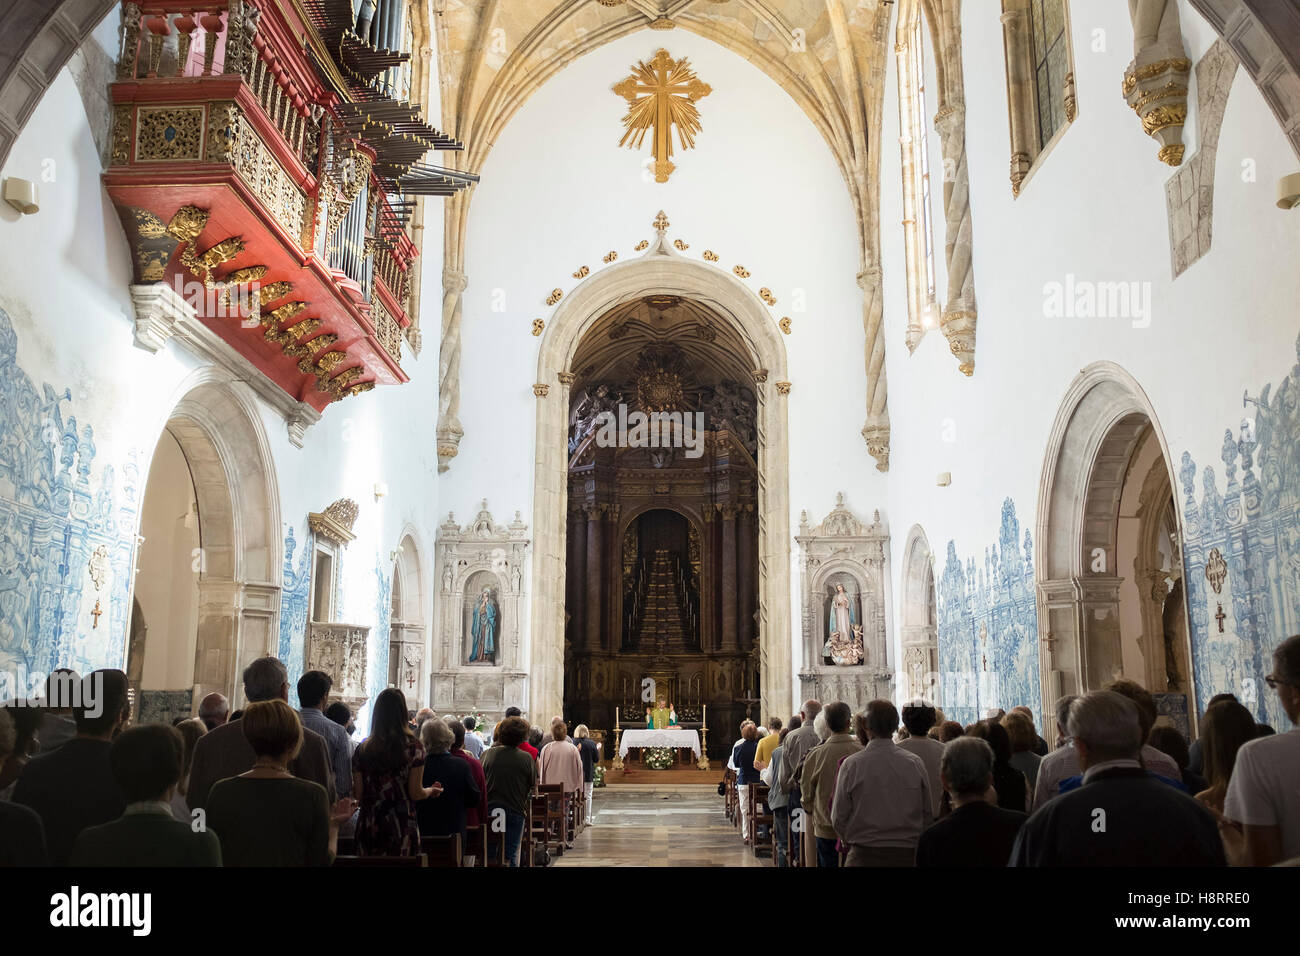 Interior view of the igreja de Santa Cruz church in Coimbra, Portugal, during mass Stock Photo